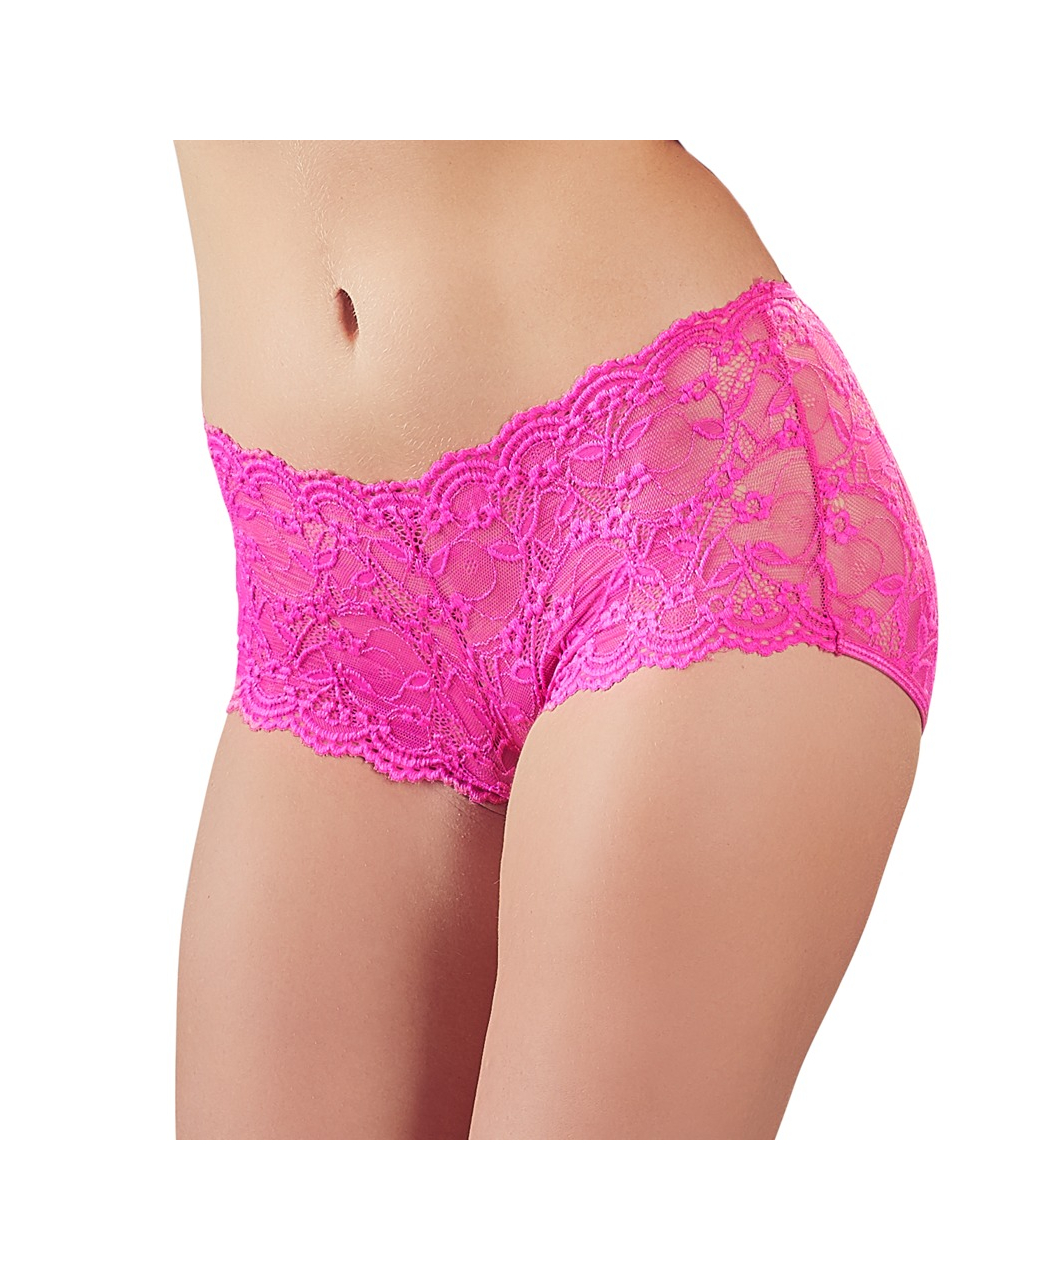 Cottelli Lingerie open back pink lace panties